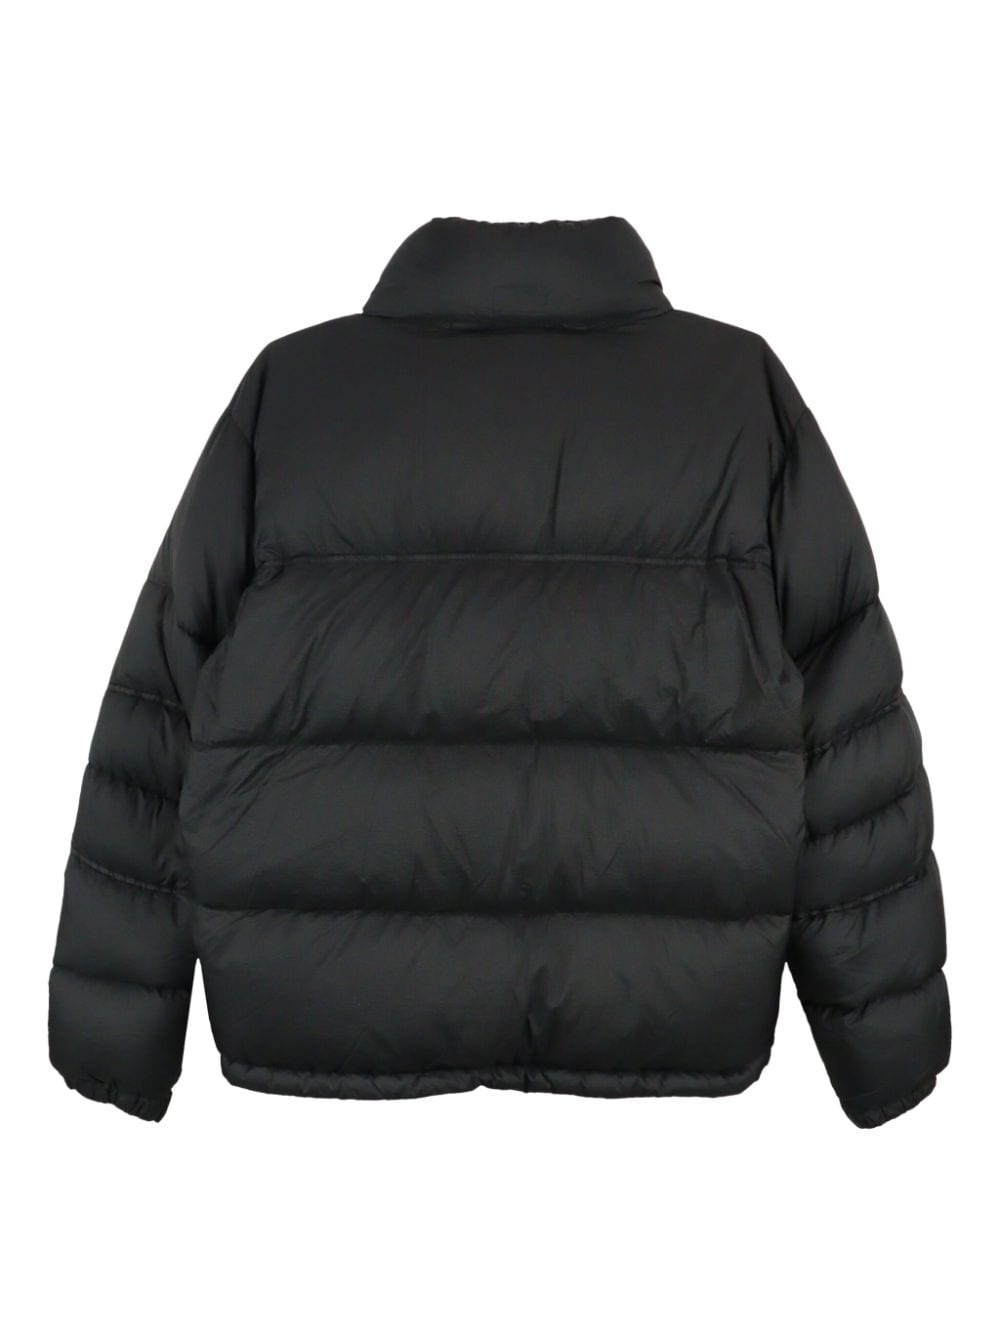 Aspen padded jacket - 2